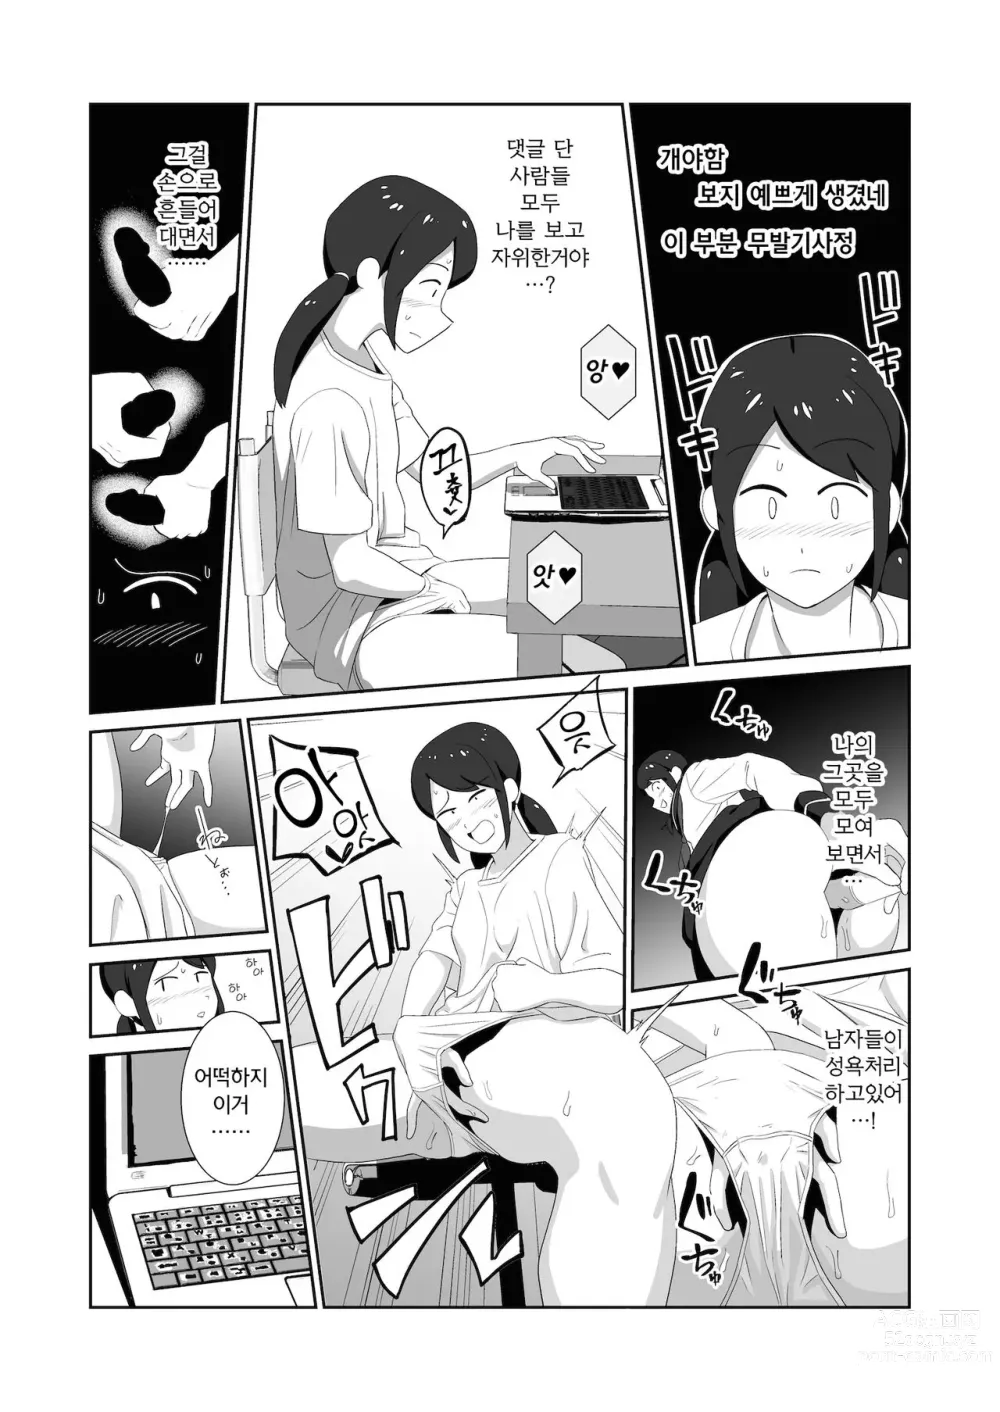 Page 6 of manga 공중화장실에서 도촬당하며 자위하는것에 빠져버린 여자